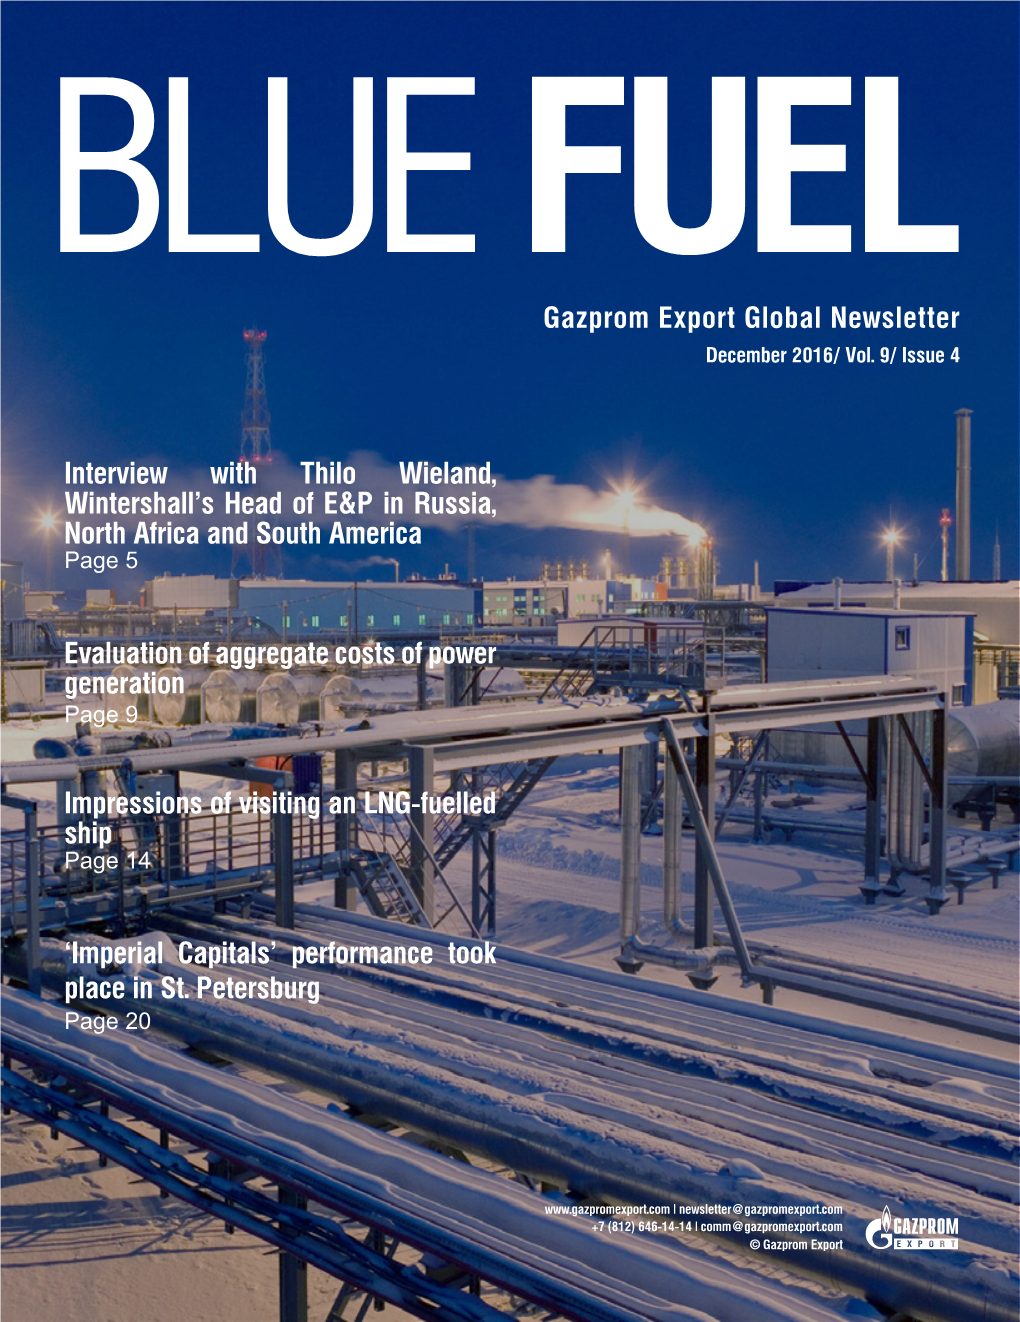 Gazprom Export Global Newsletter December 2016/ Vol